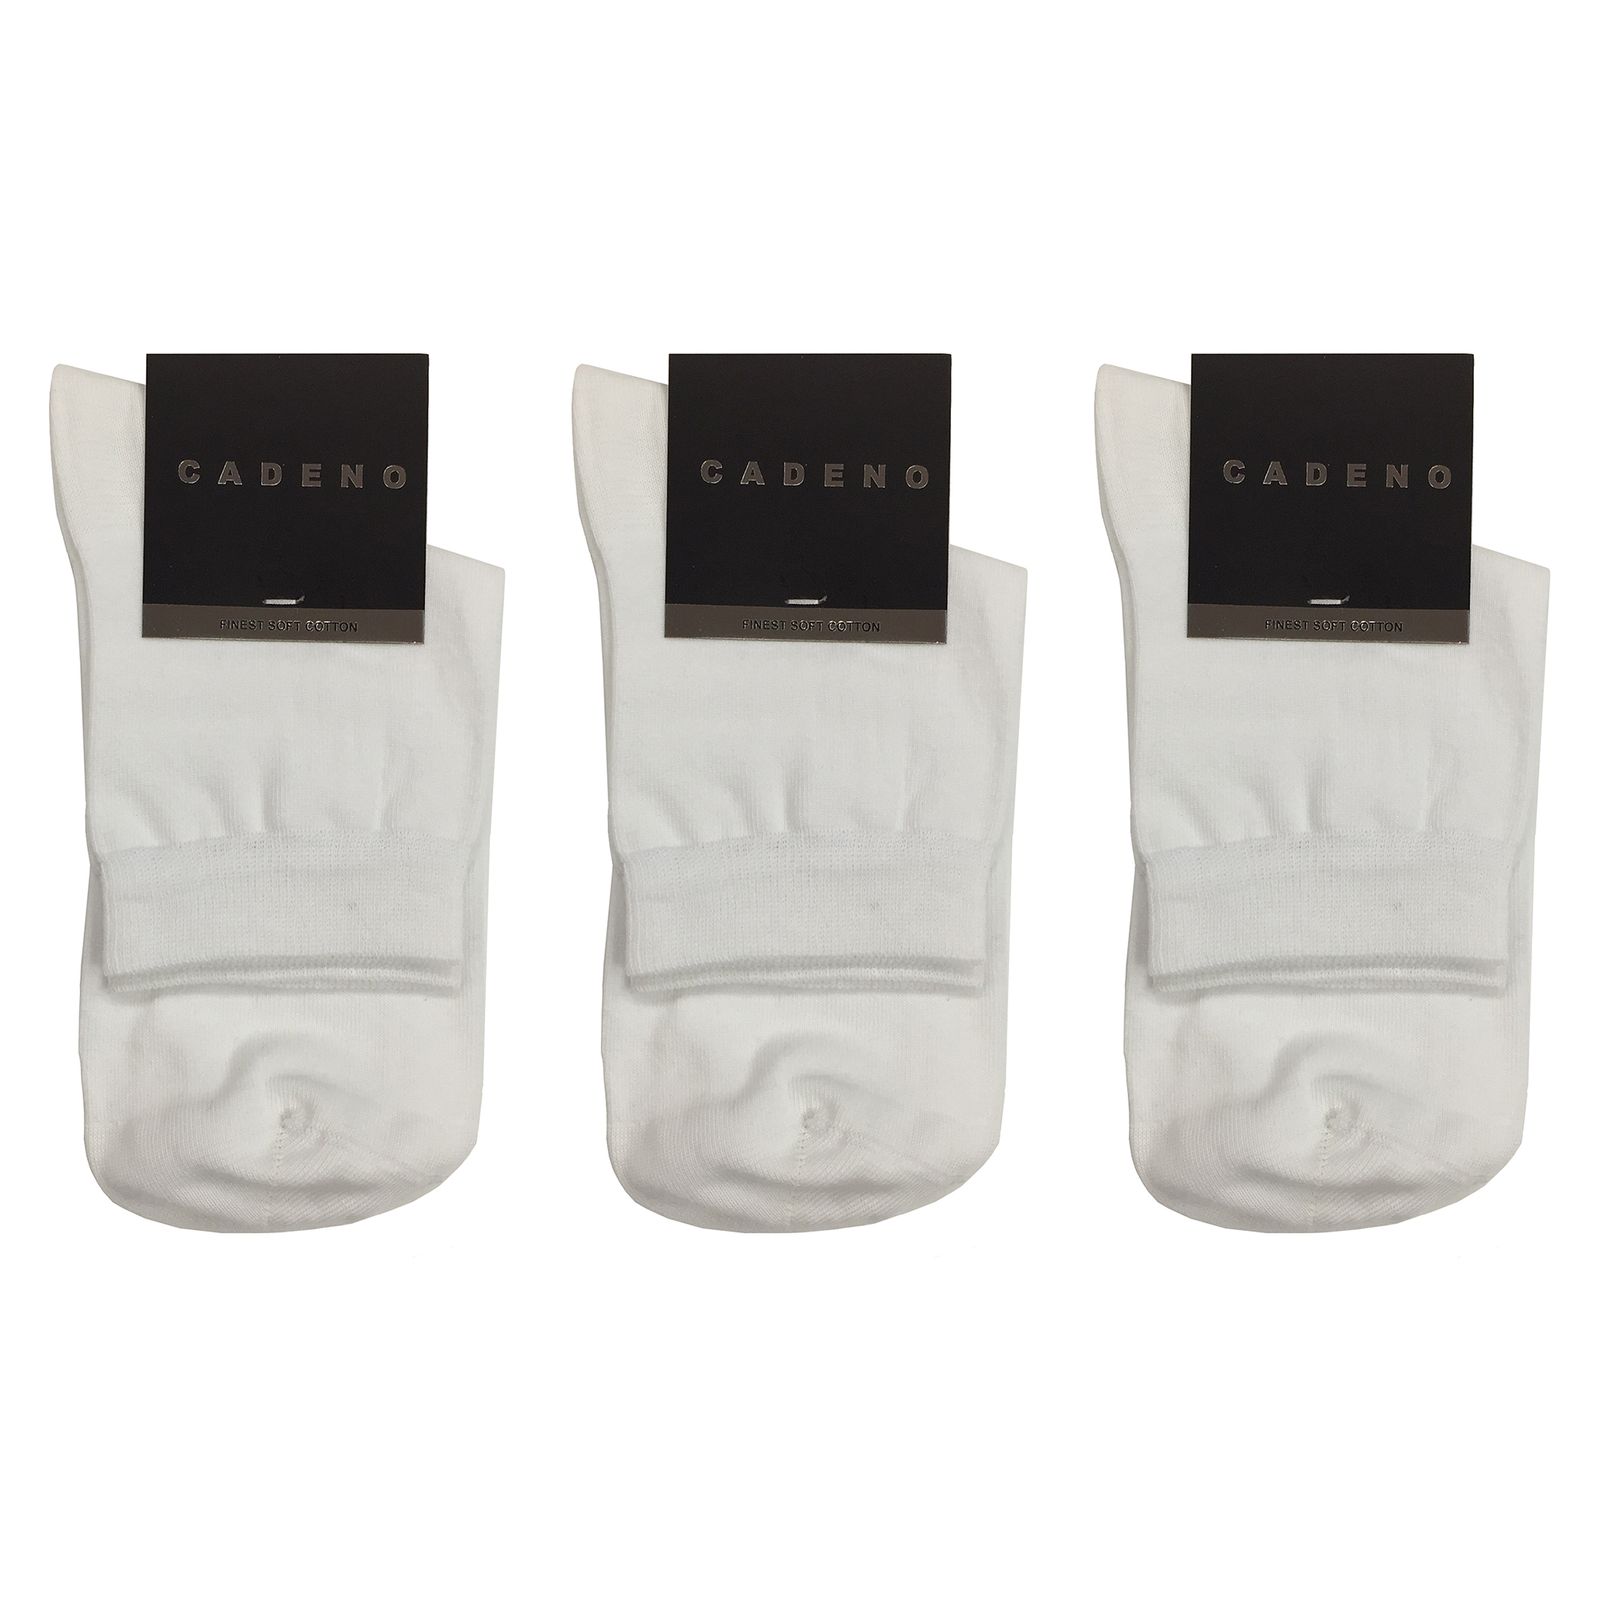 جوراب مردانه کادنو مدل CANS1021 رنگ سفید بسته 3 عددی -  - 1